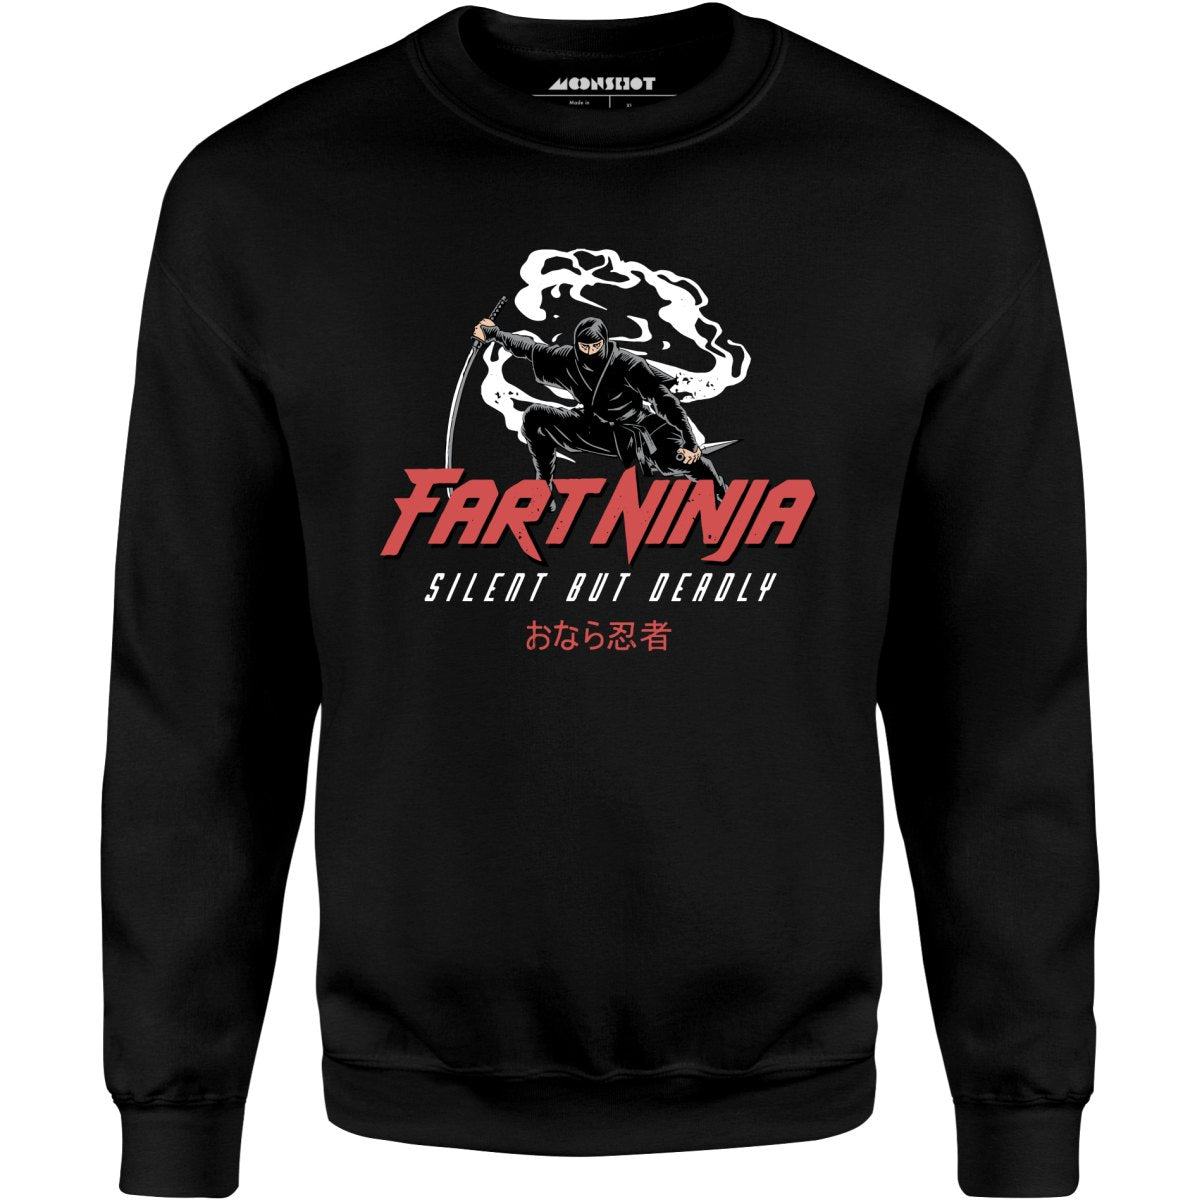 Fart Ninja - Unisex Sweatshirt